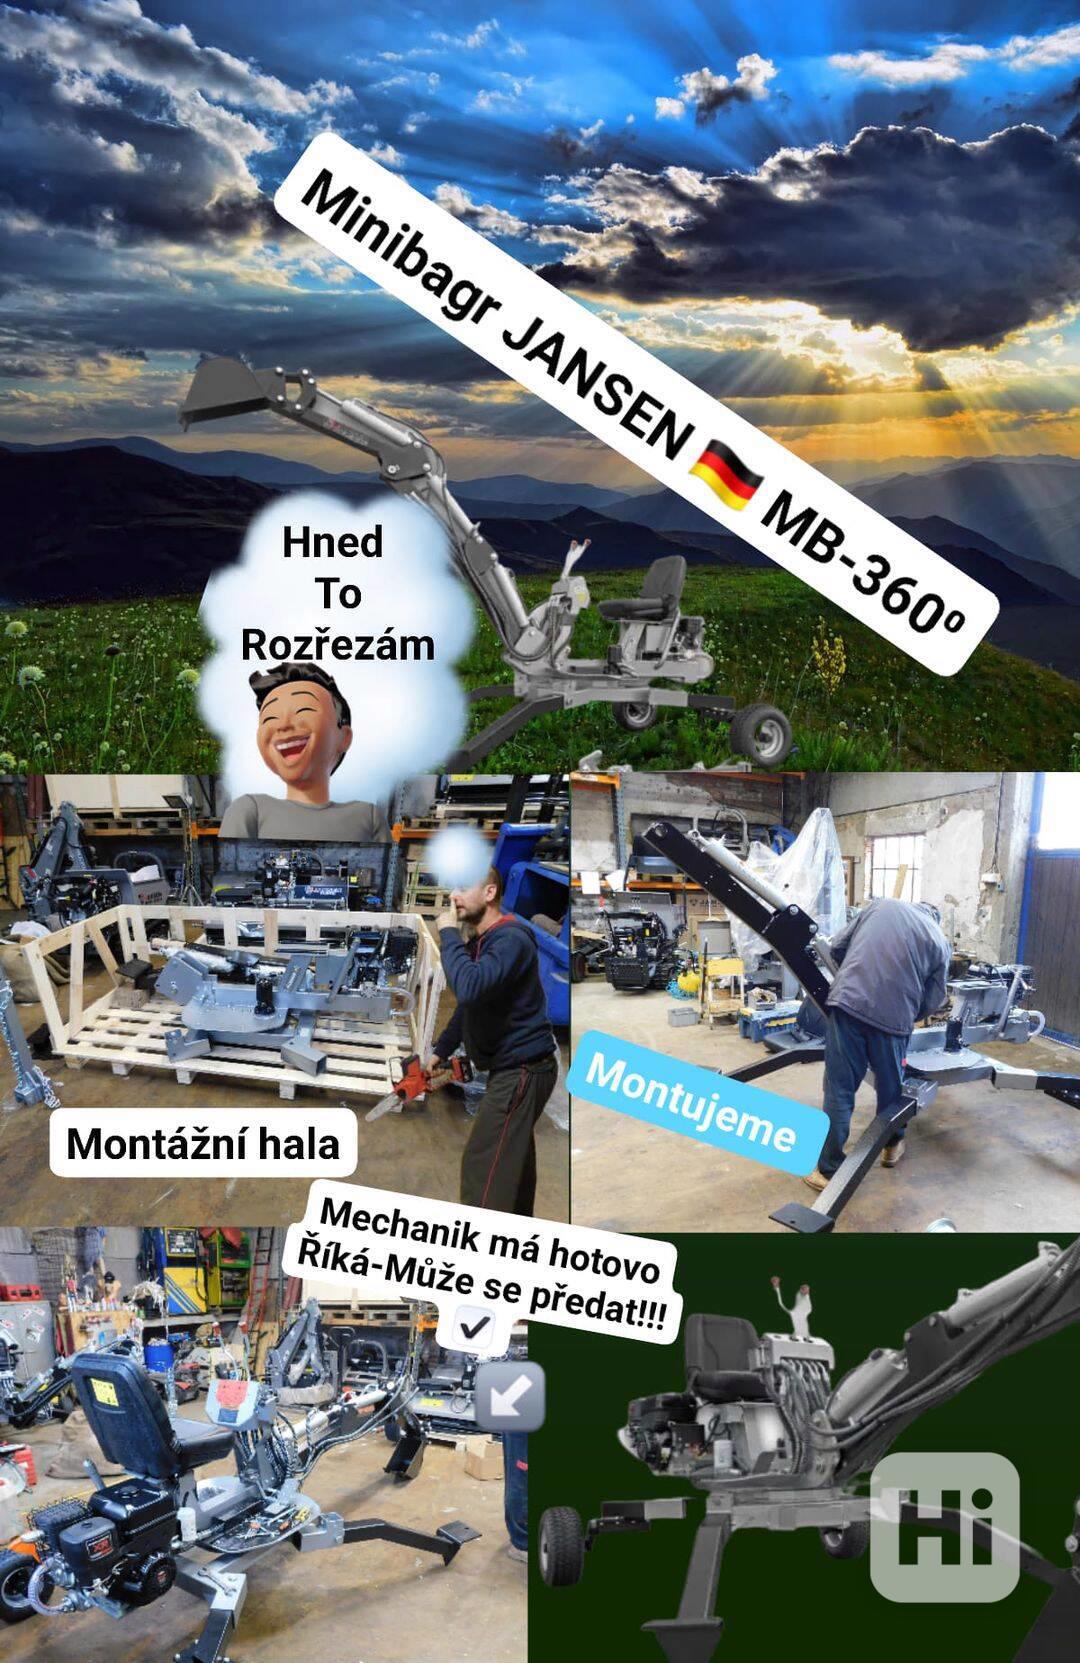 Minibagr Jansen MB-360° - foto 1